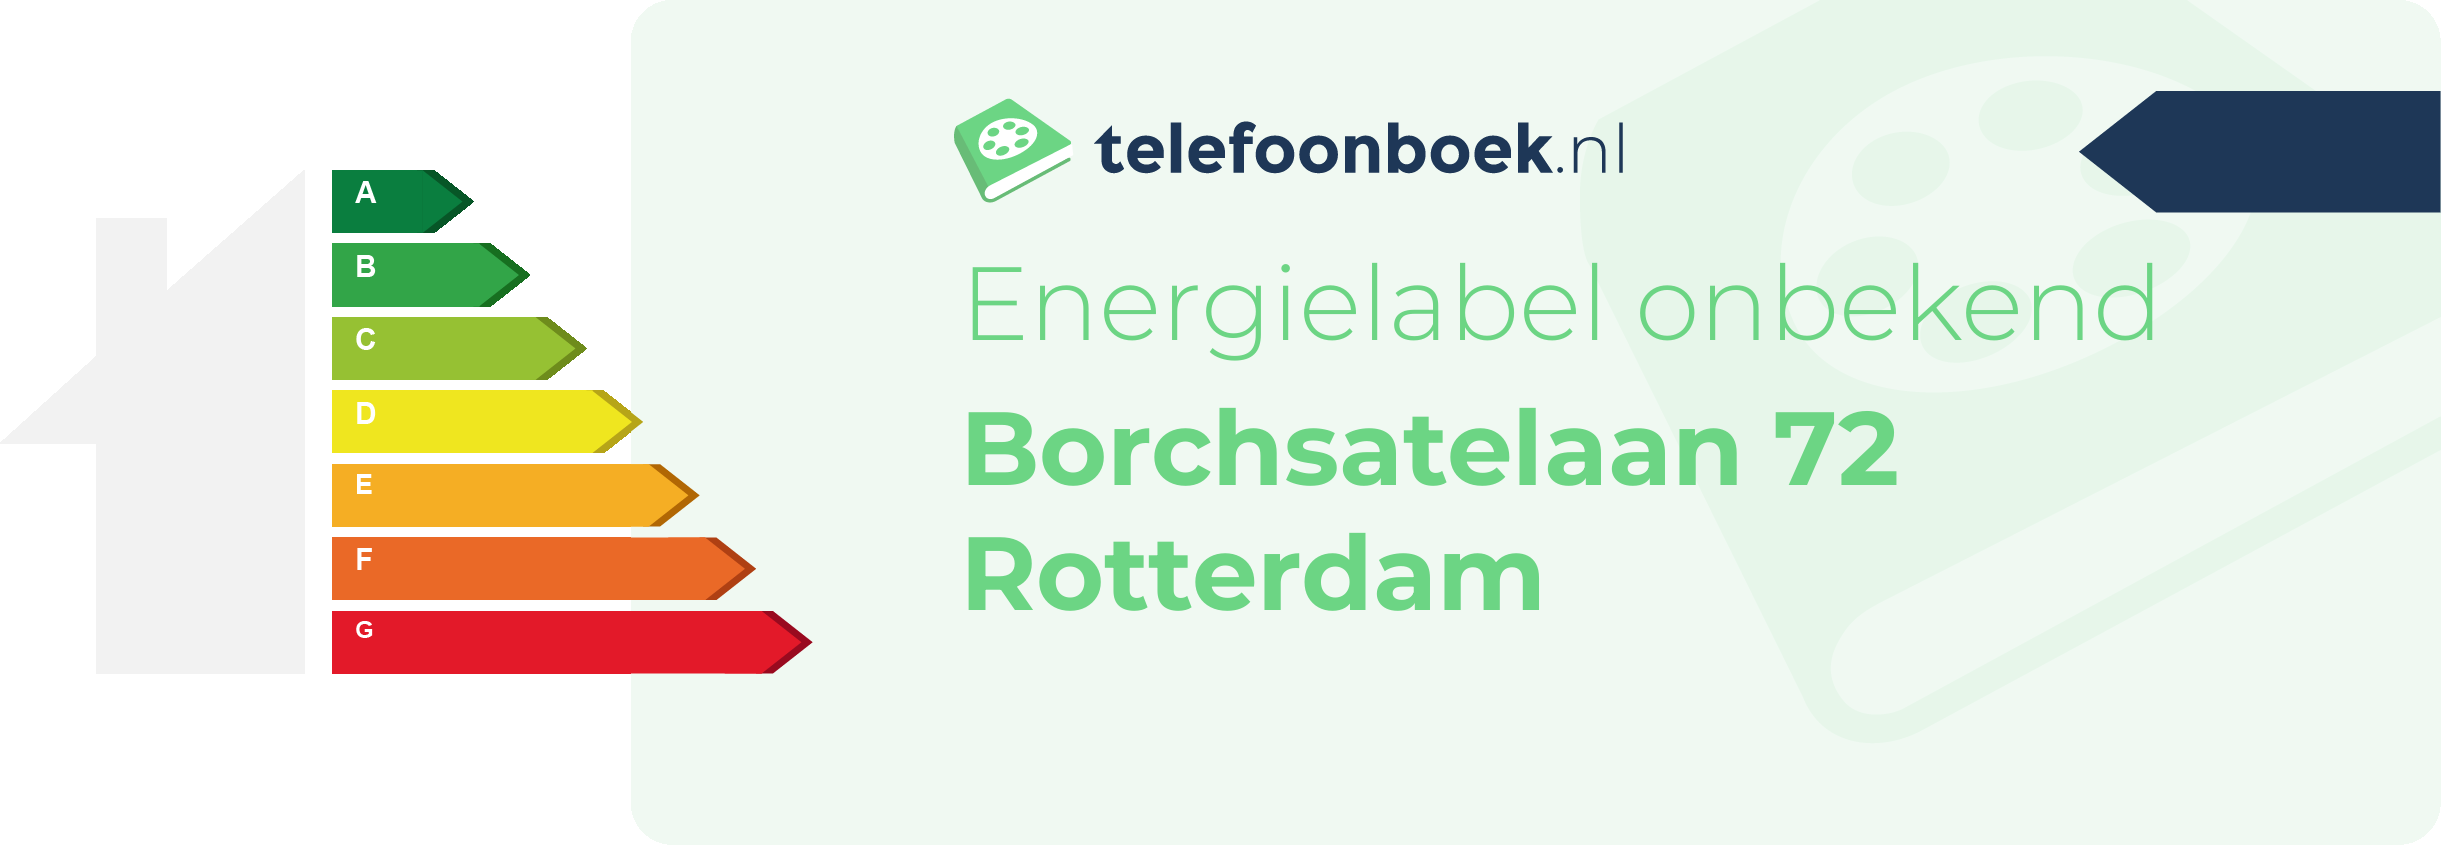 Energielabel Borchsatelaan 72 Rotterdam